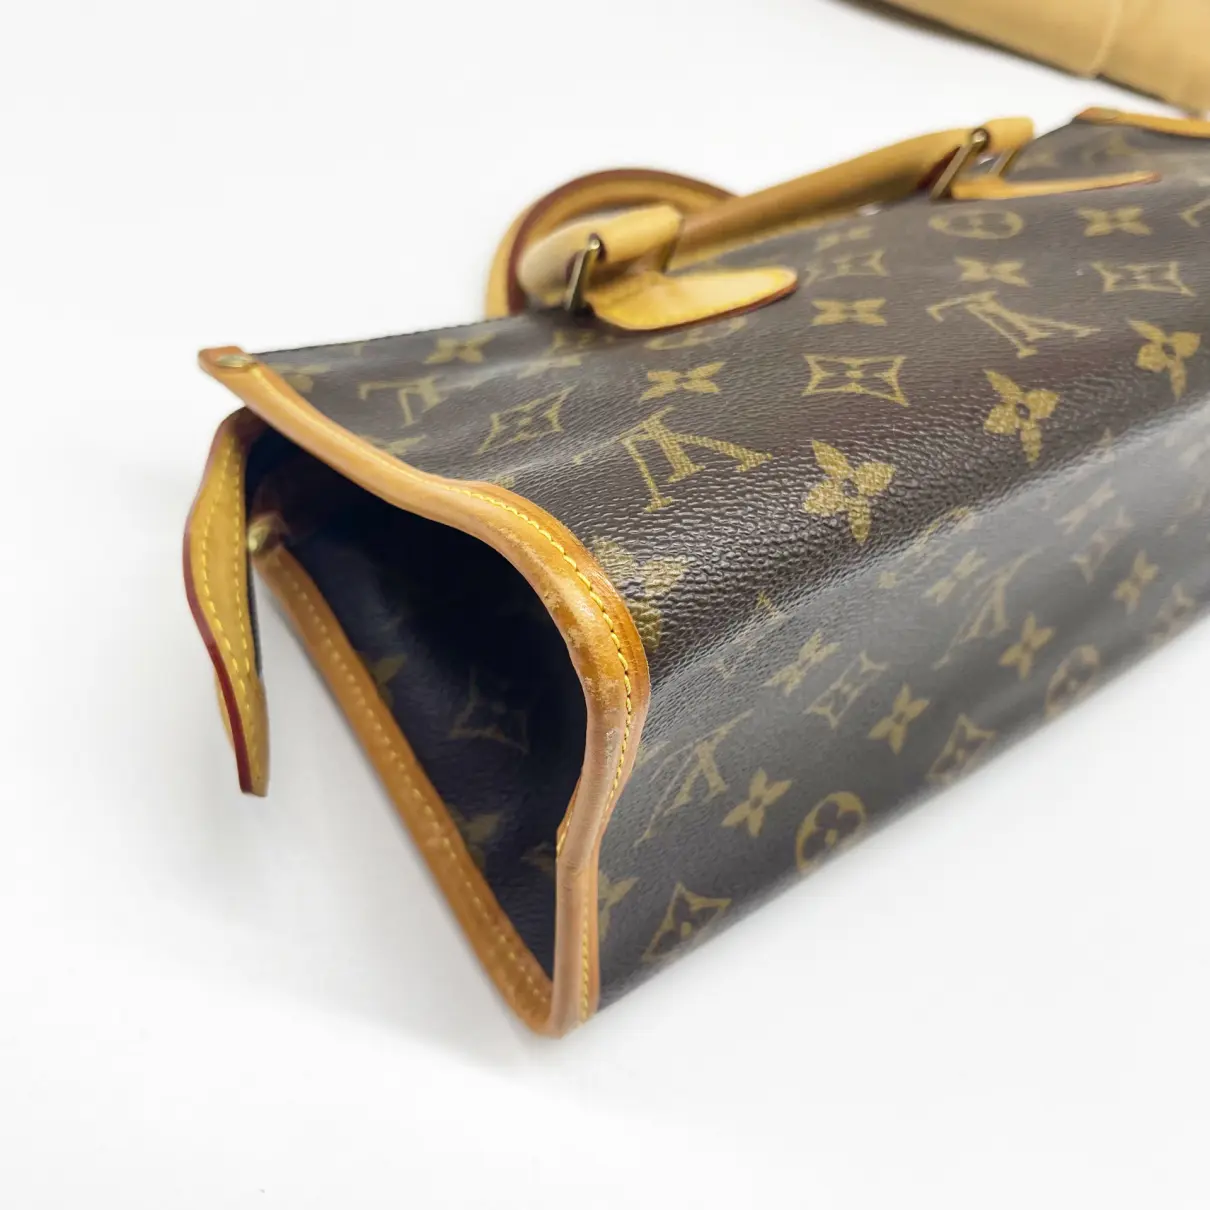 Popincourt leather handbag Louis Vuitton